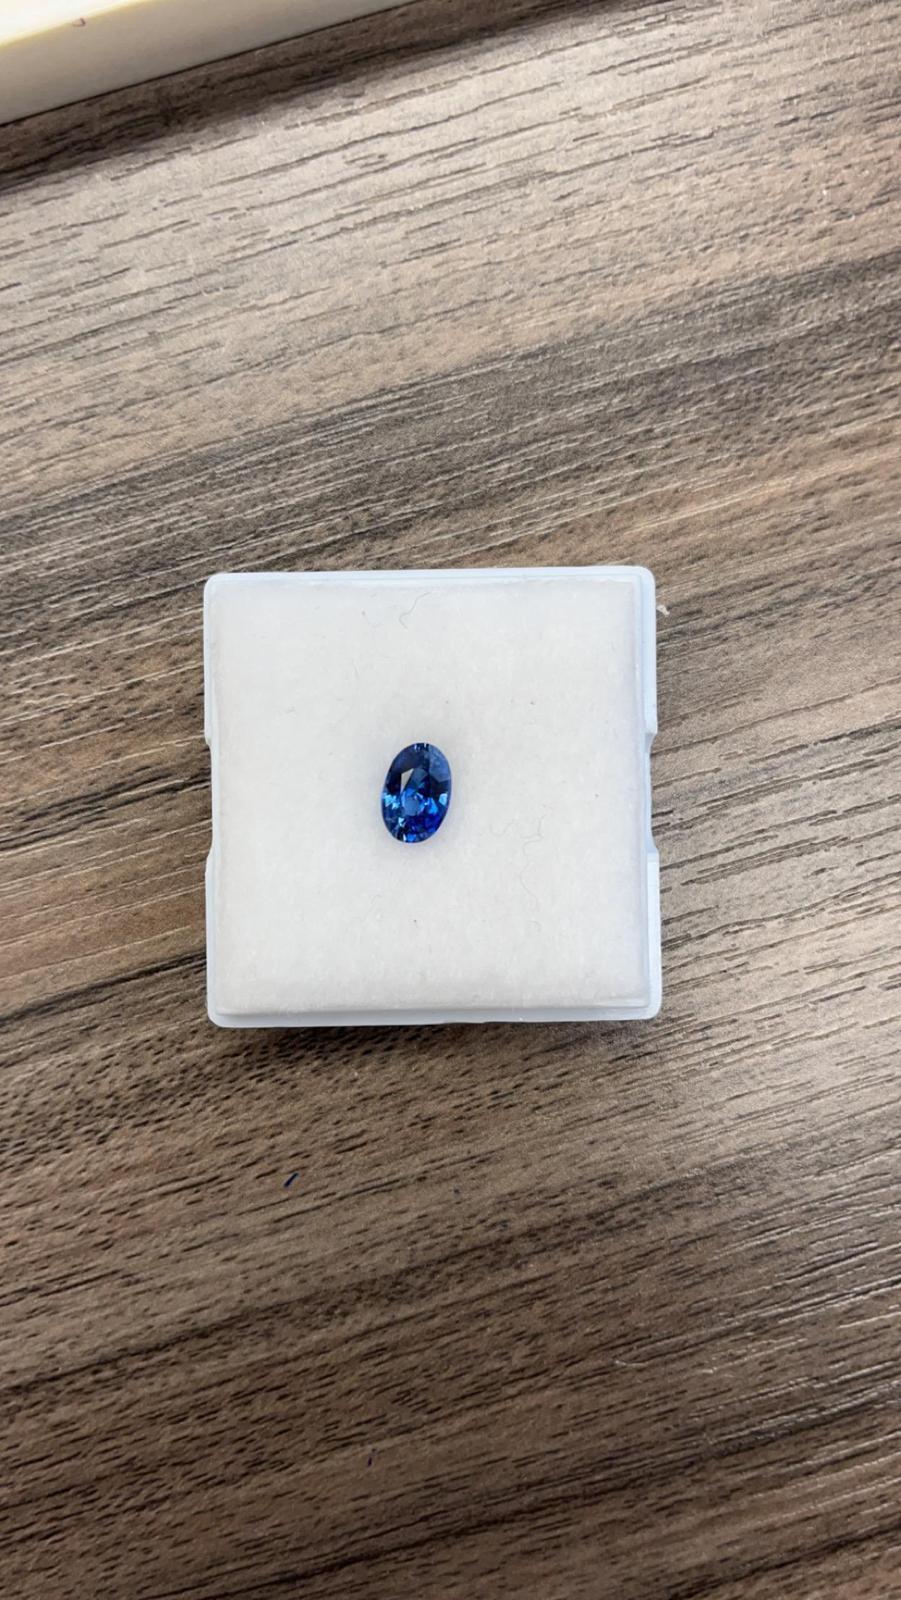 Oval Cut 1.58 Carat Oval Blue Sapphire For Sale